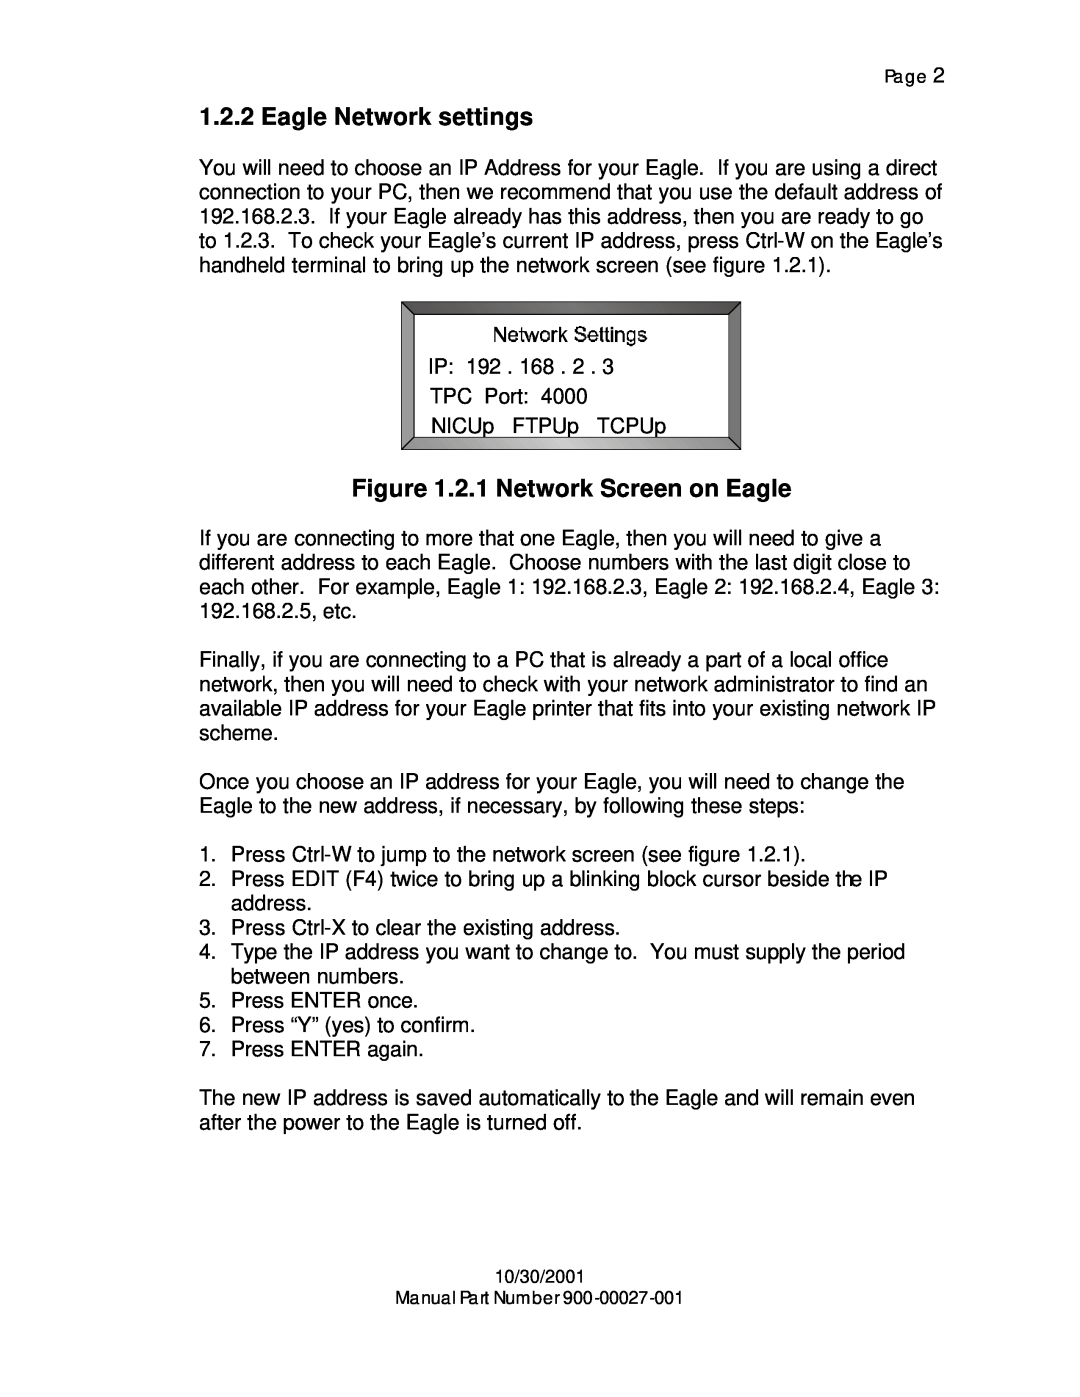 Eagle Electronics 900-00027-001, TransEagle Network Software manual Eagle Network settings, 2.1 Network Screen on Eagle 